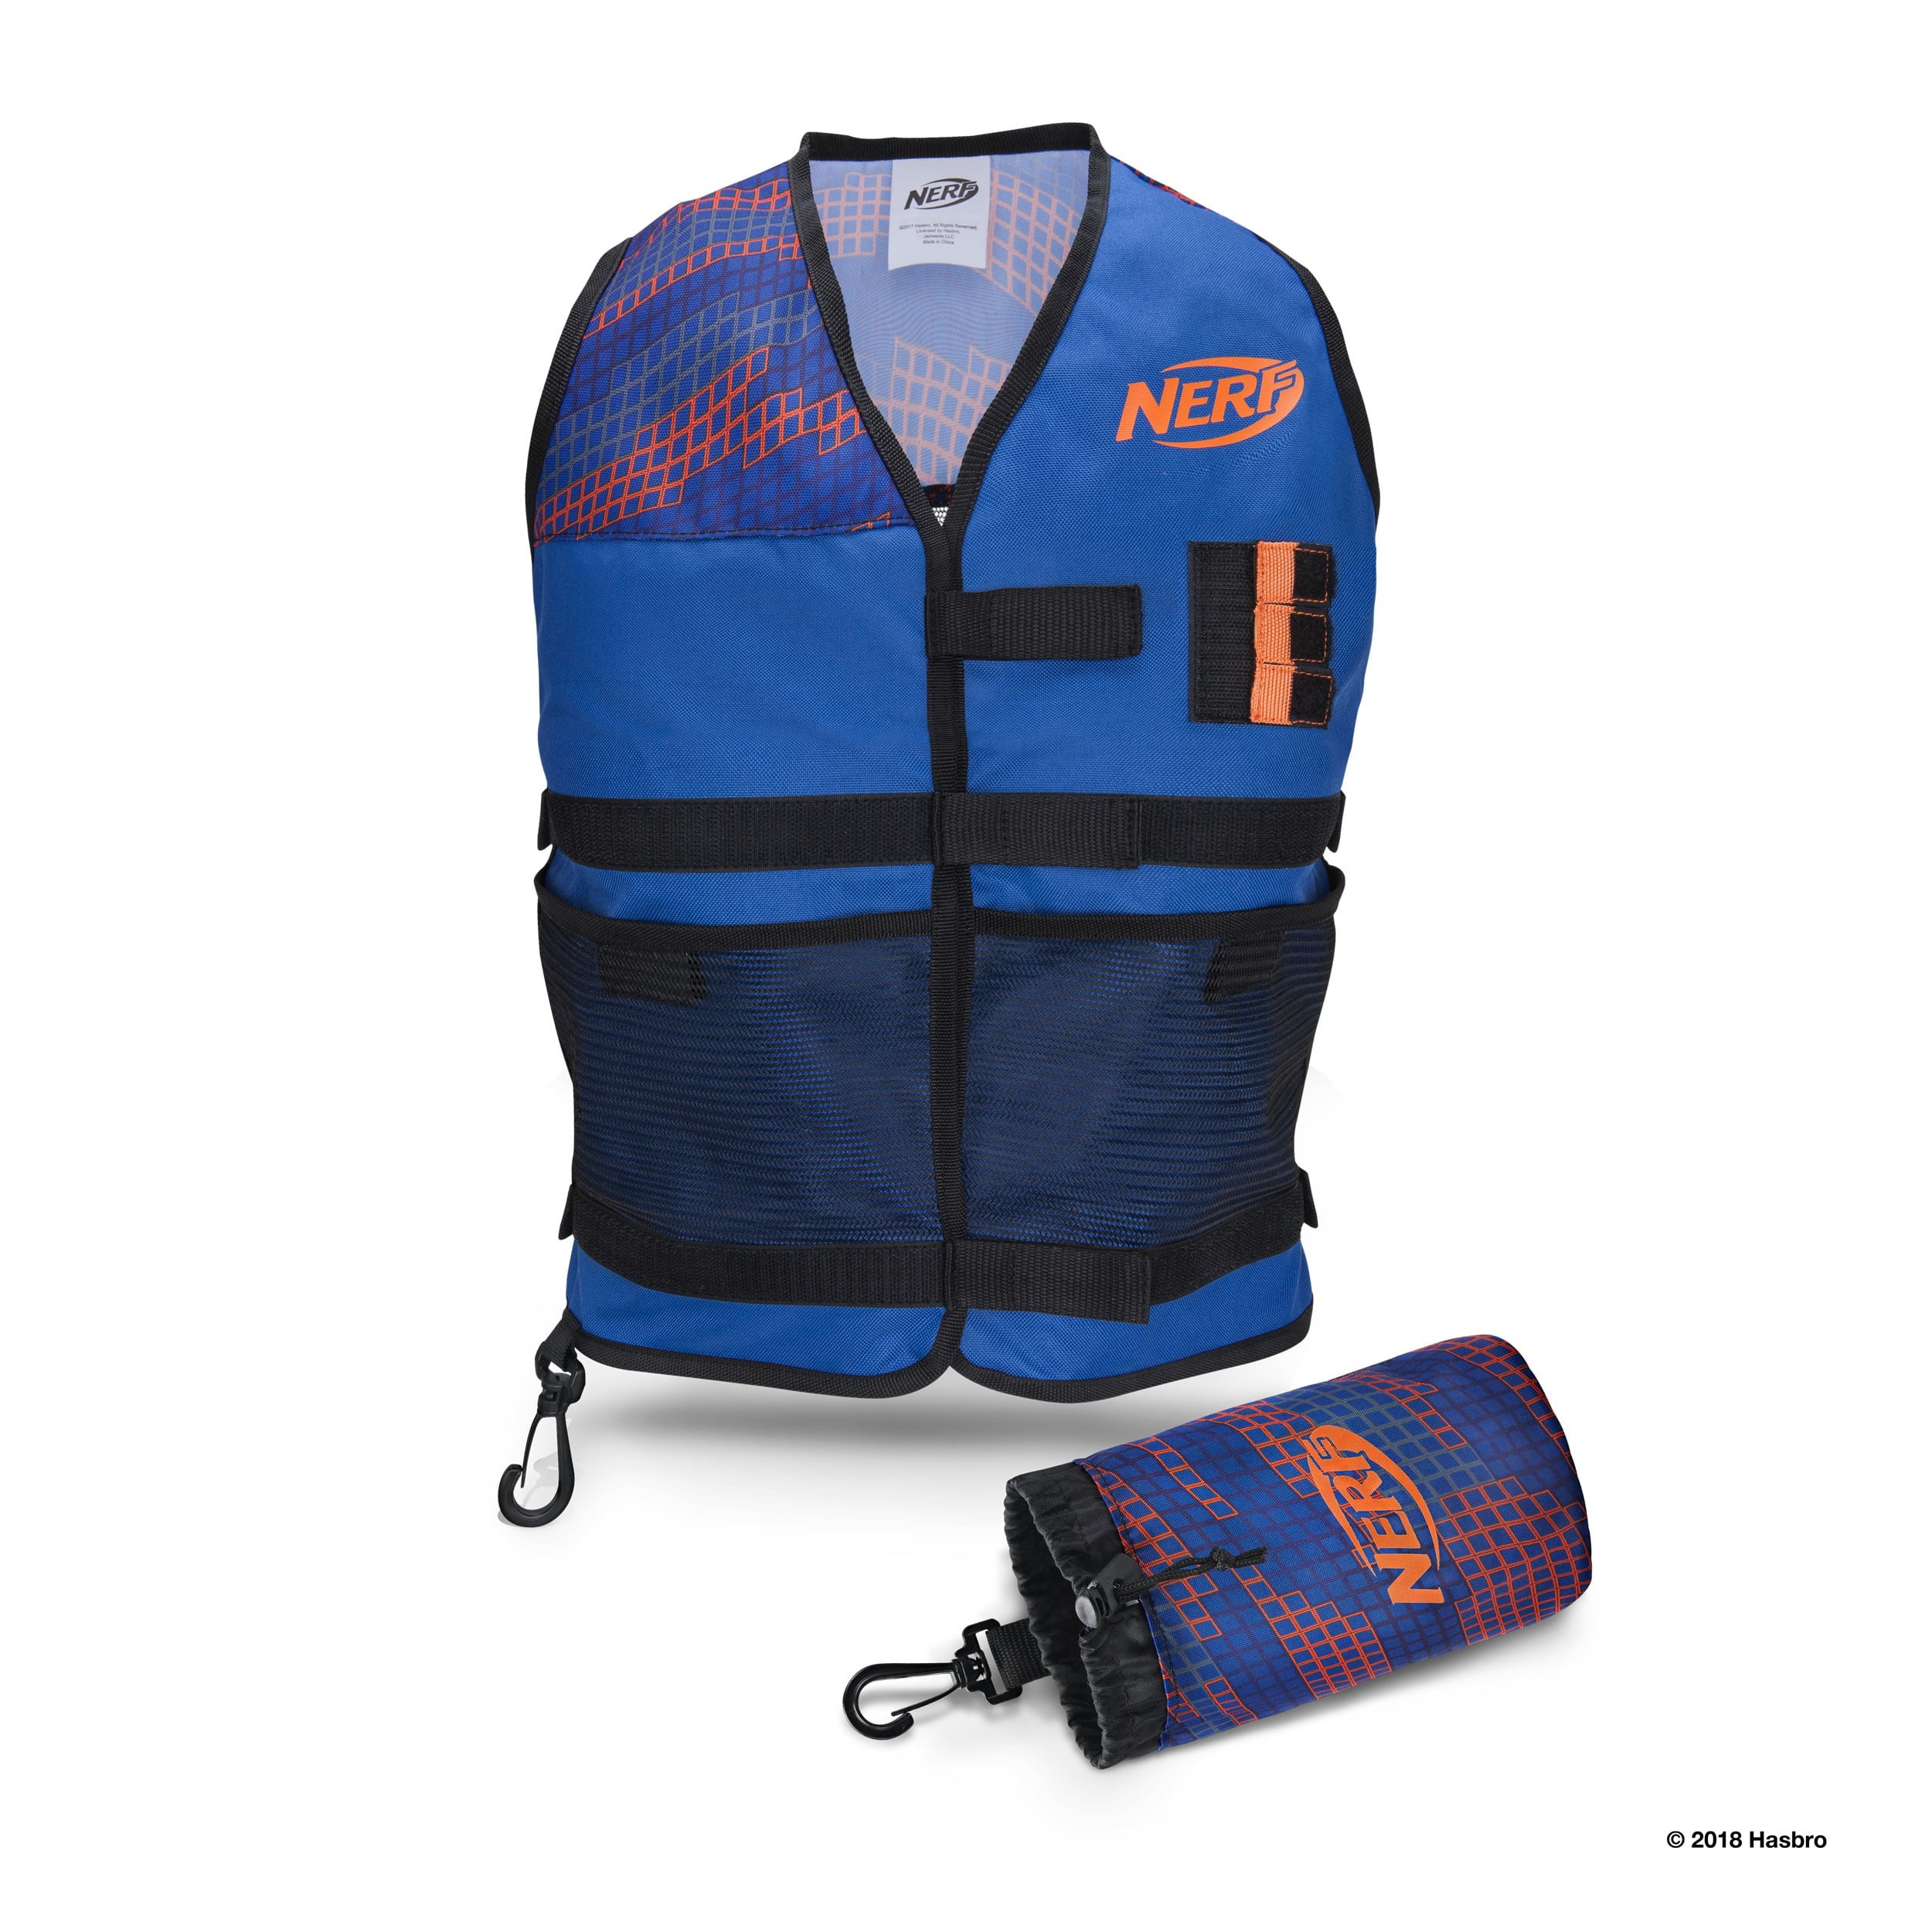 NERF 11598 Tactical Gear Vest Pack for sale online